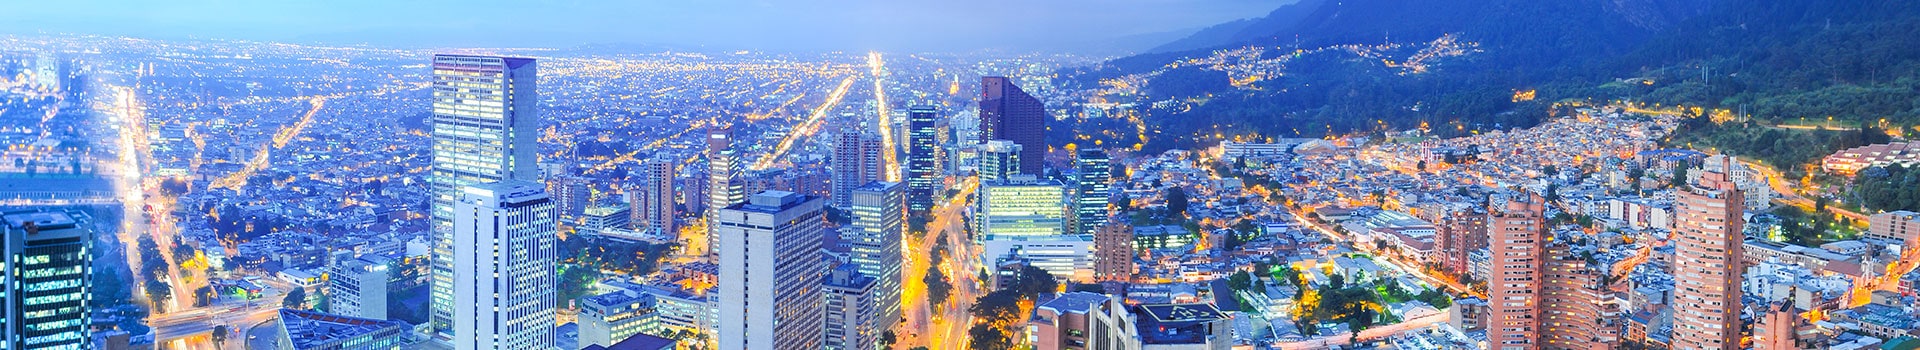 Madrid - Bogotá